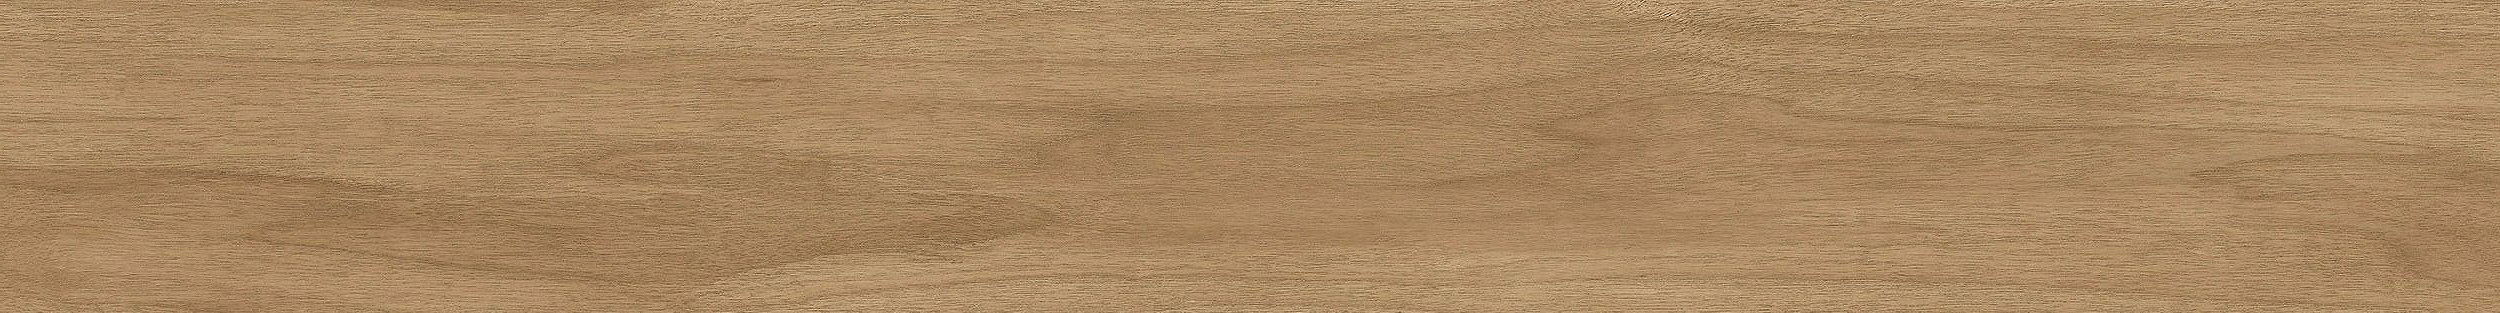 Criterion Classic Woodgrains LVT In Washed Maple numéro d’image 5